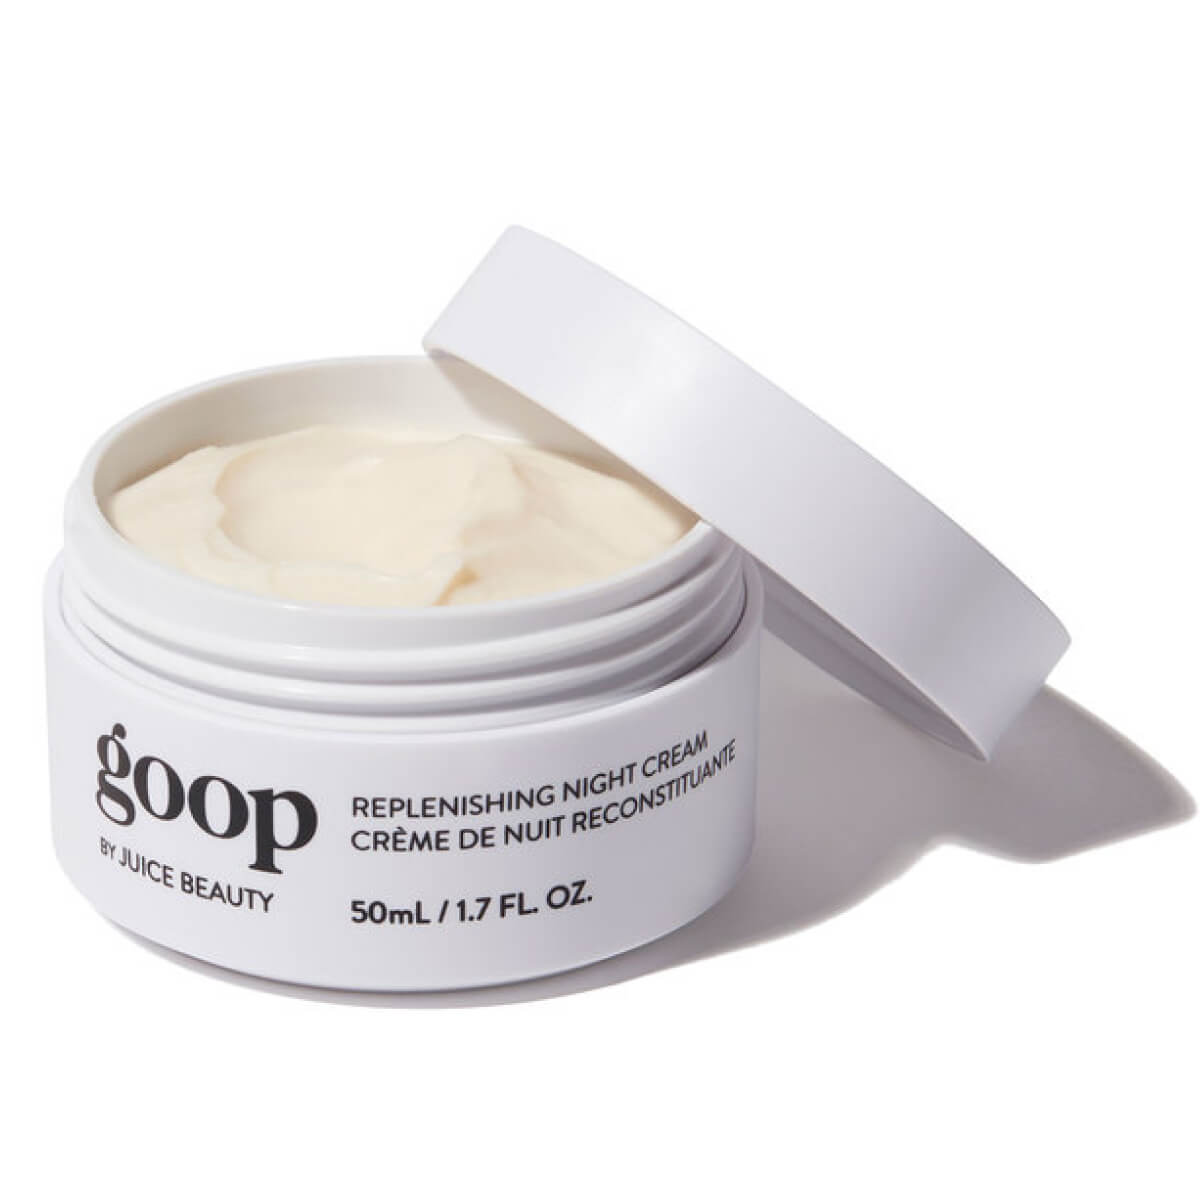 goop by Juice Beauty Replenishing Night Cream